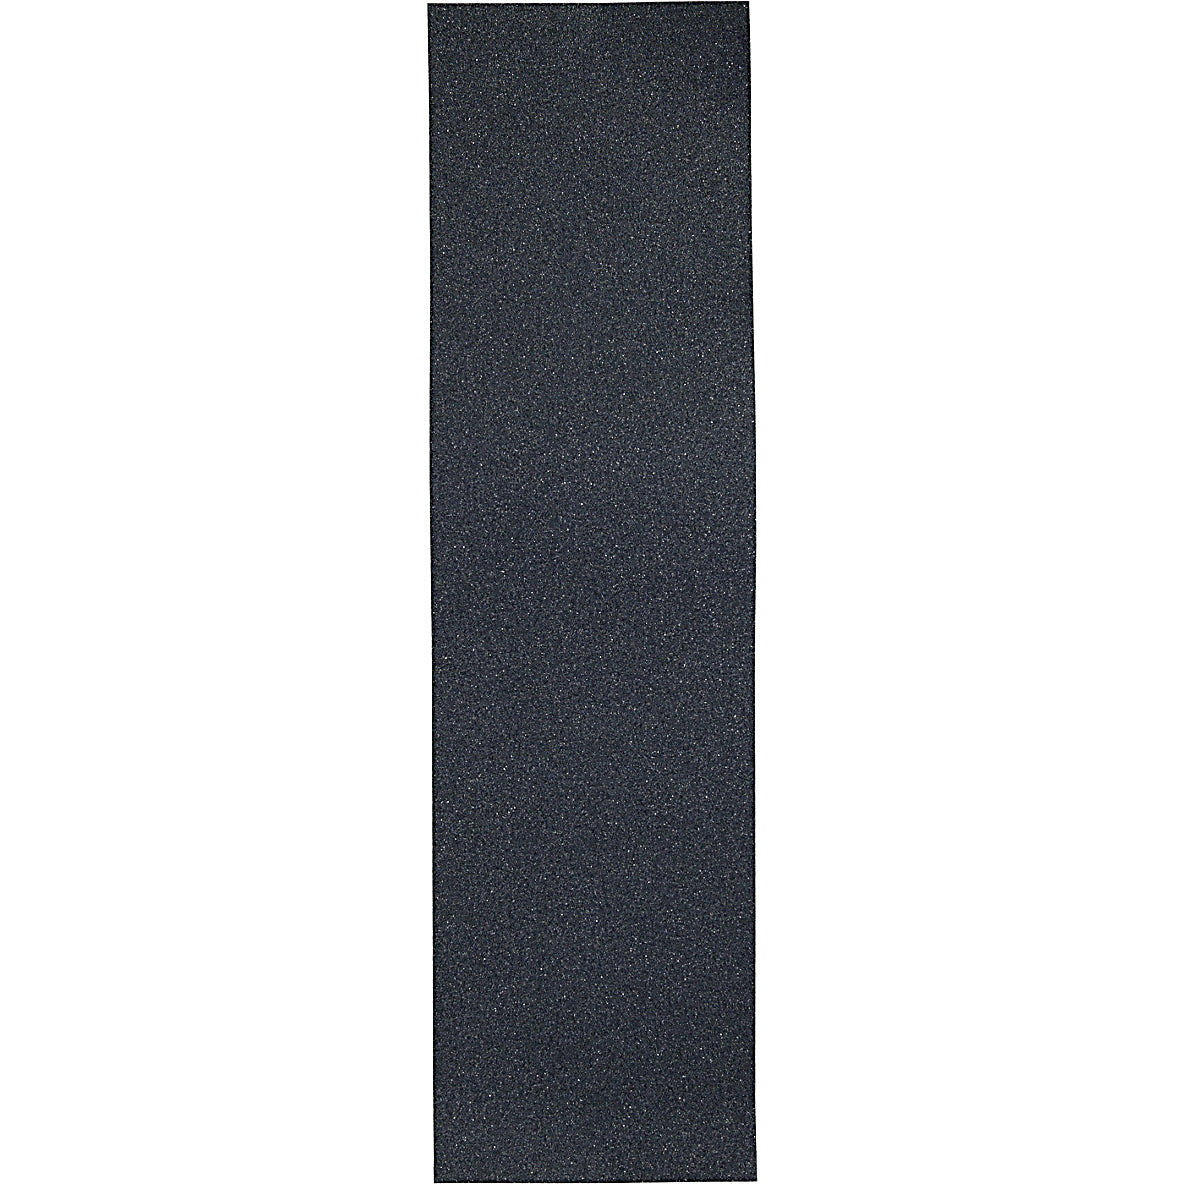 Jessup 9.5" x 33" Sheet Grip Tape